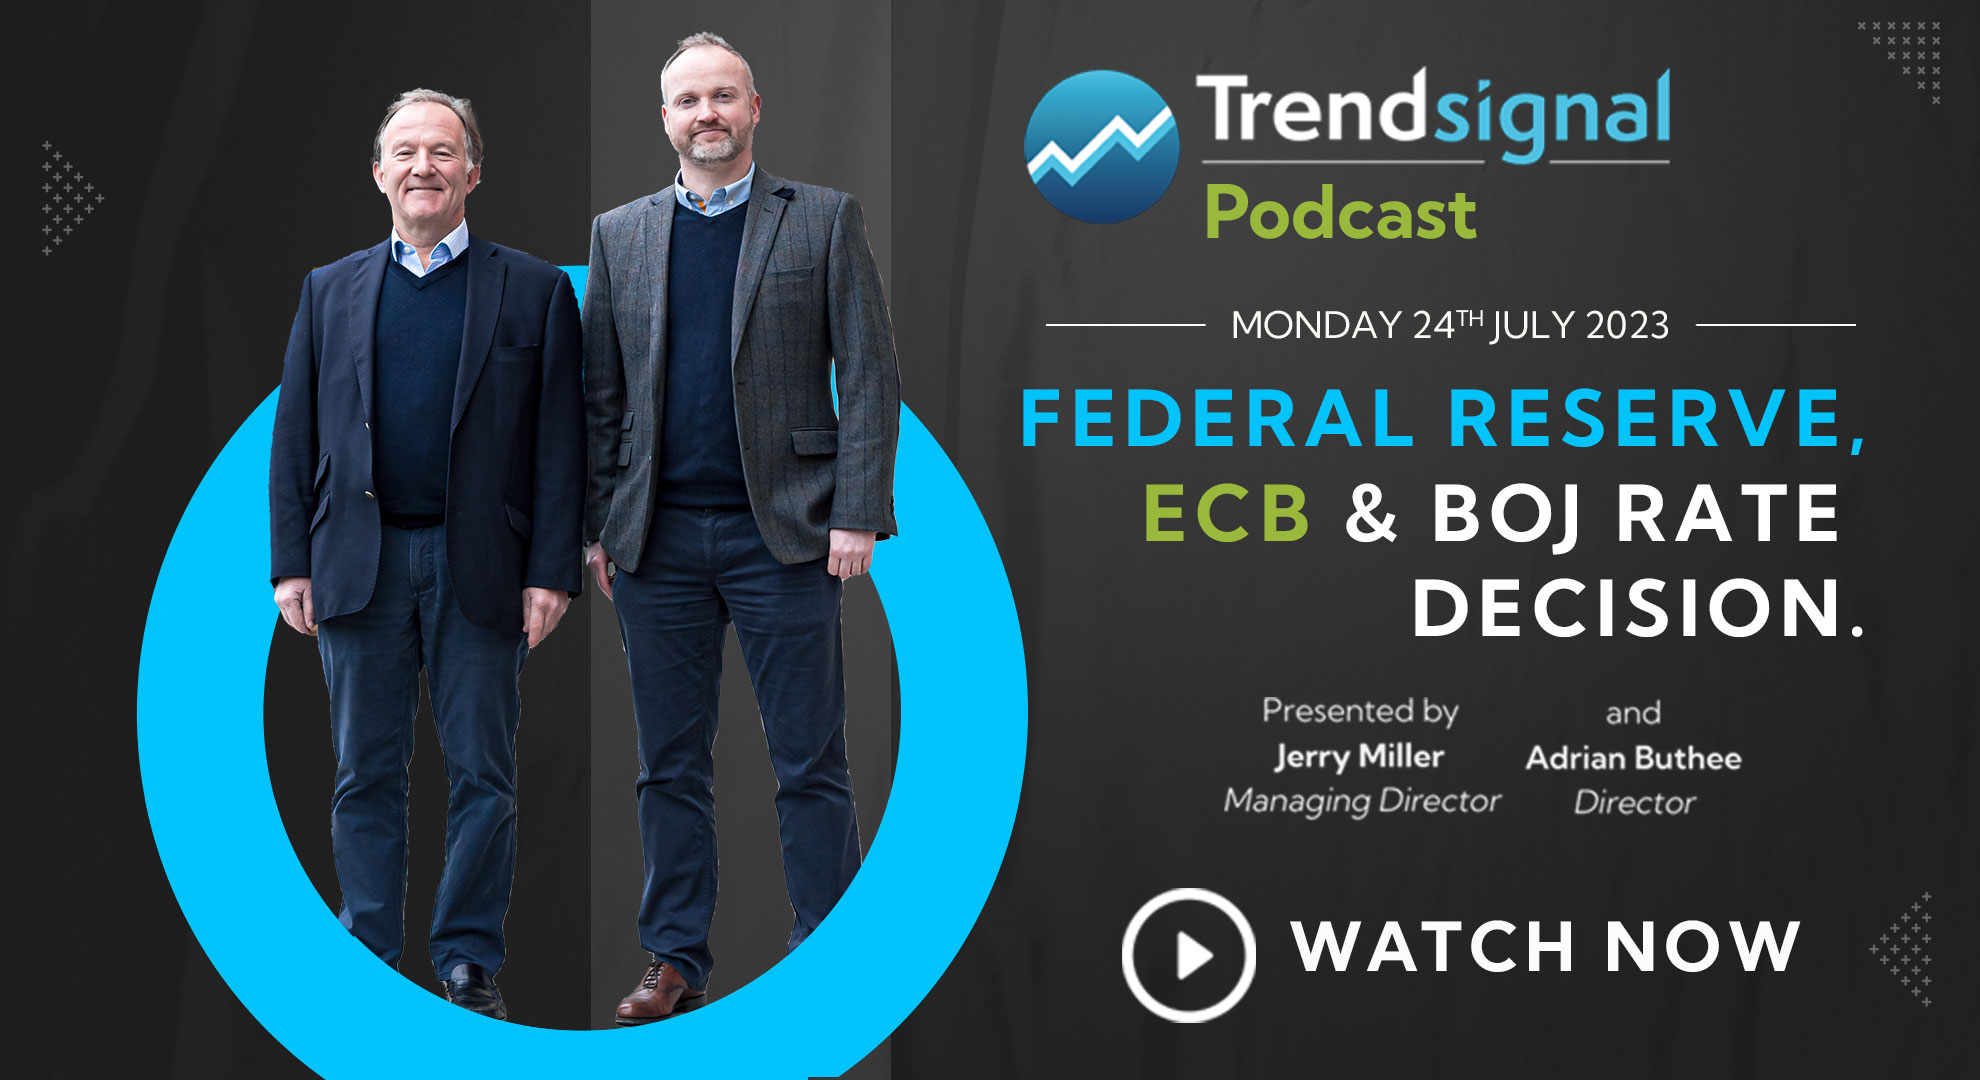 Podcast: Federal Reserve, ECB & BoJ rate decision.